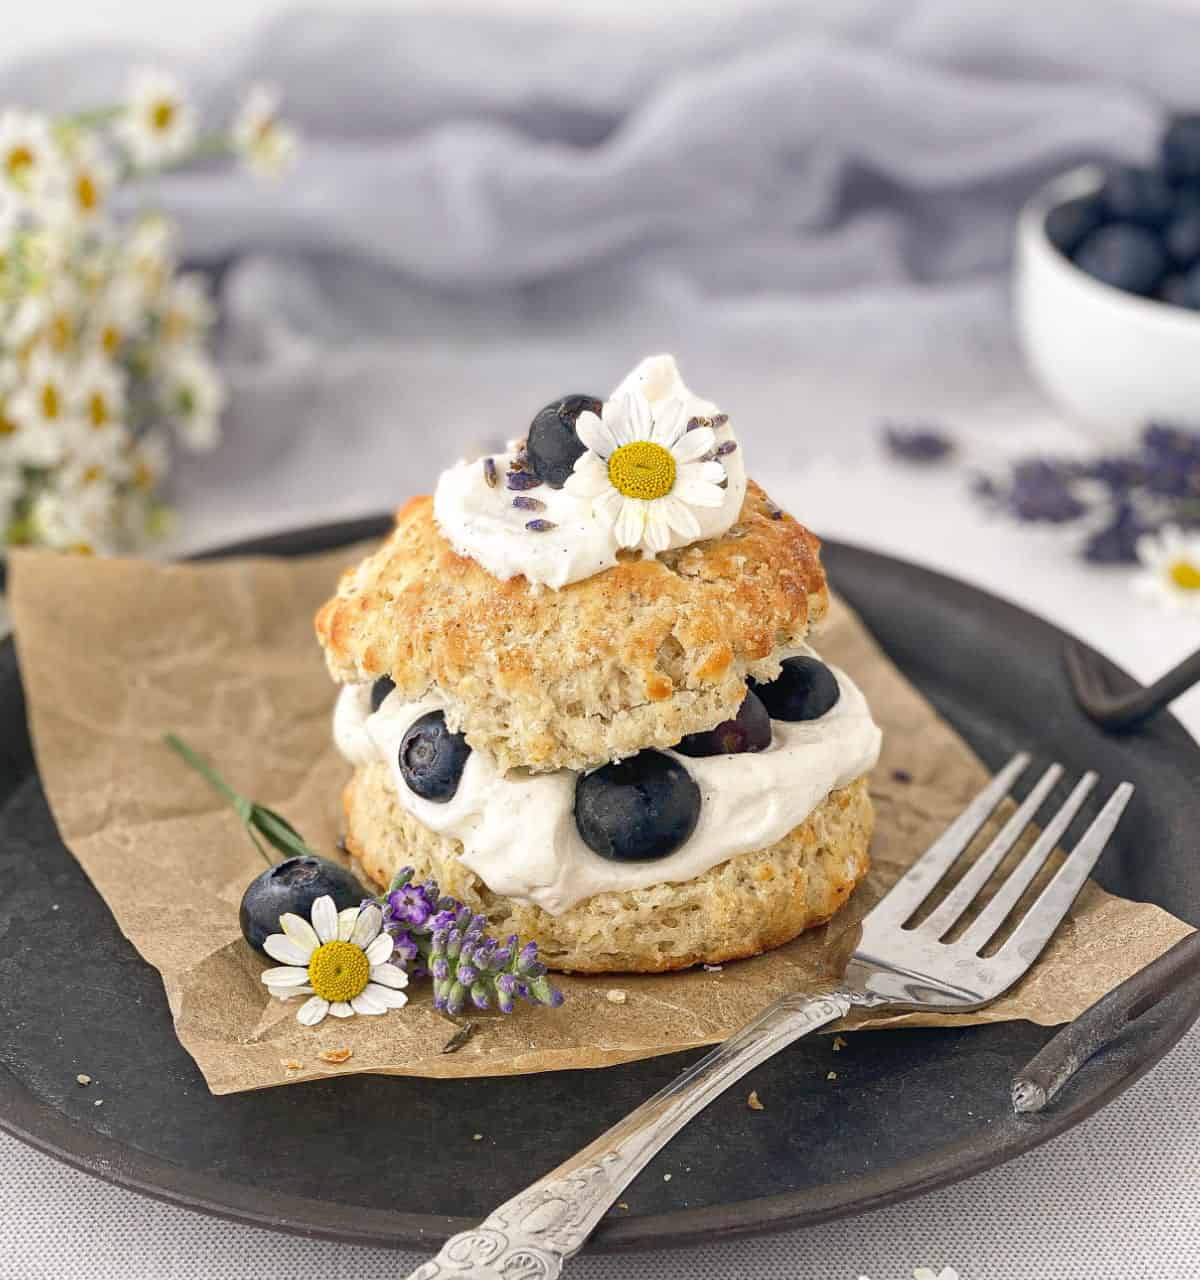 Blueberry Shortcake with a silver fork alongside.